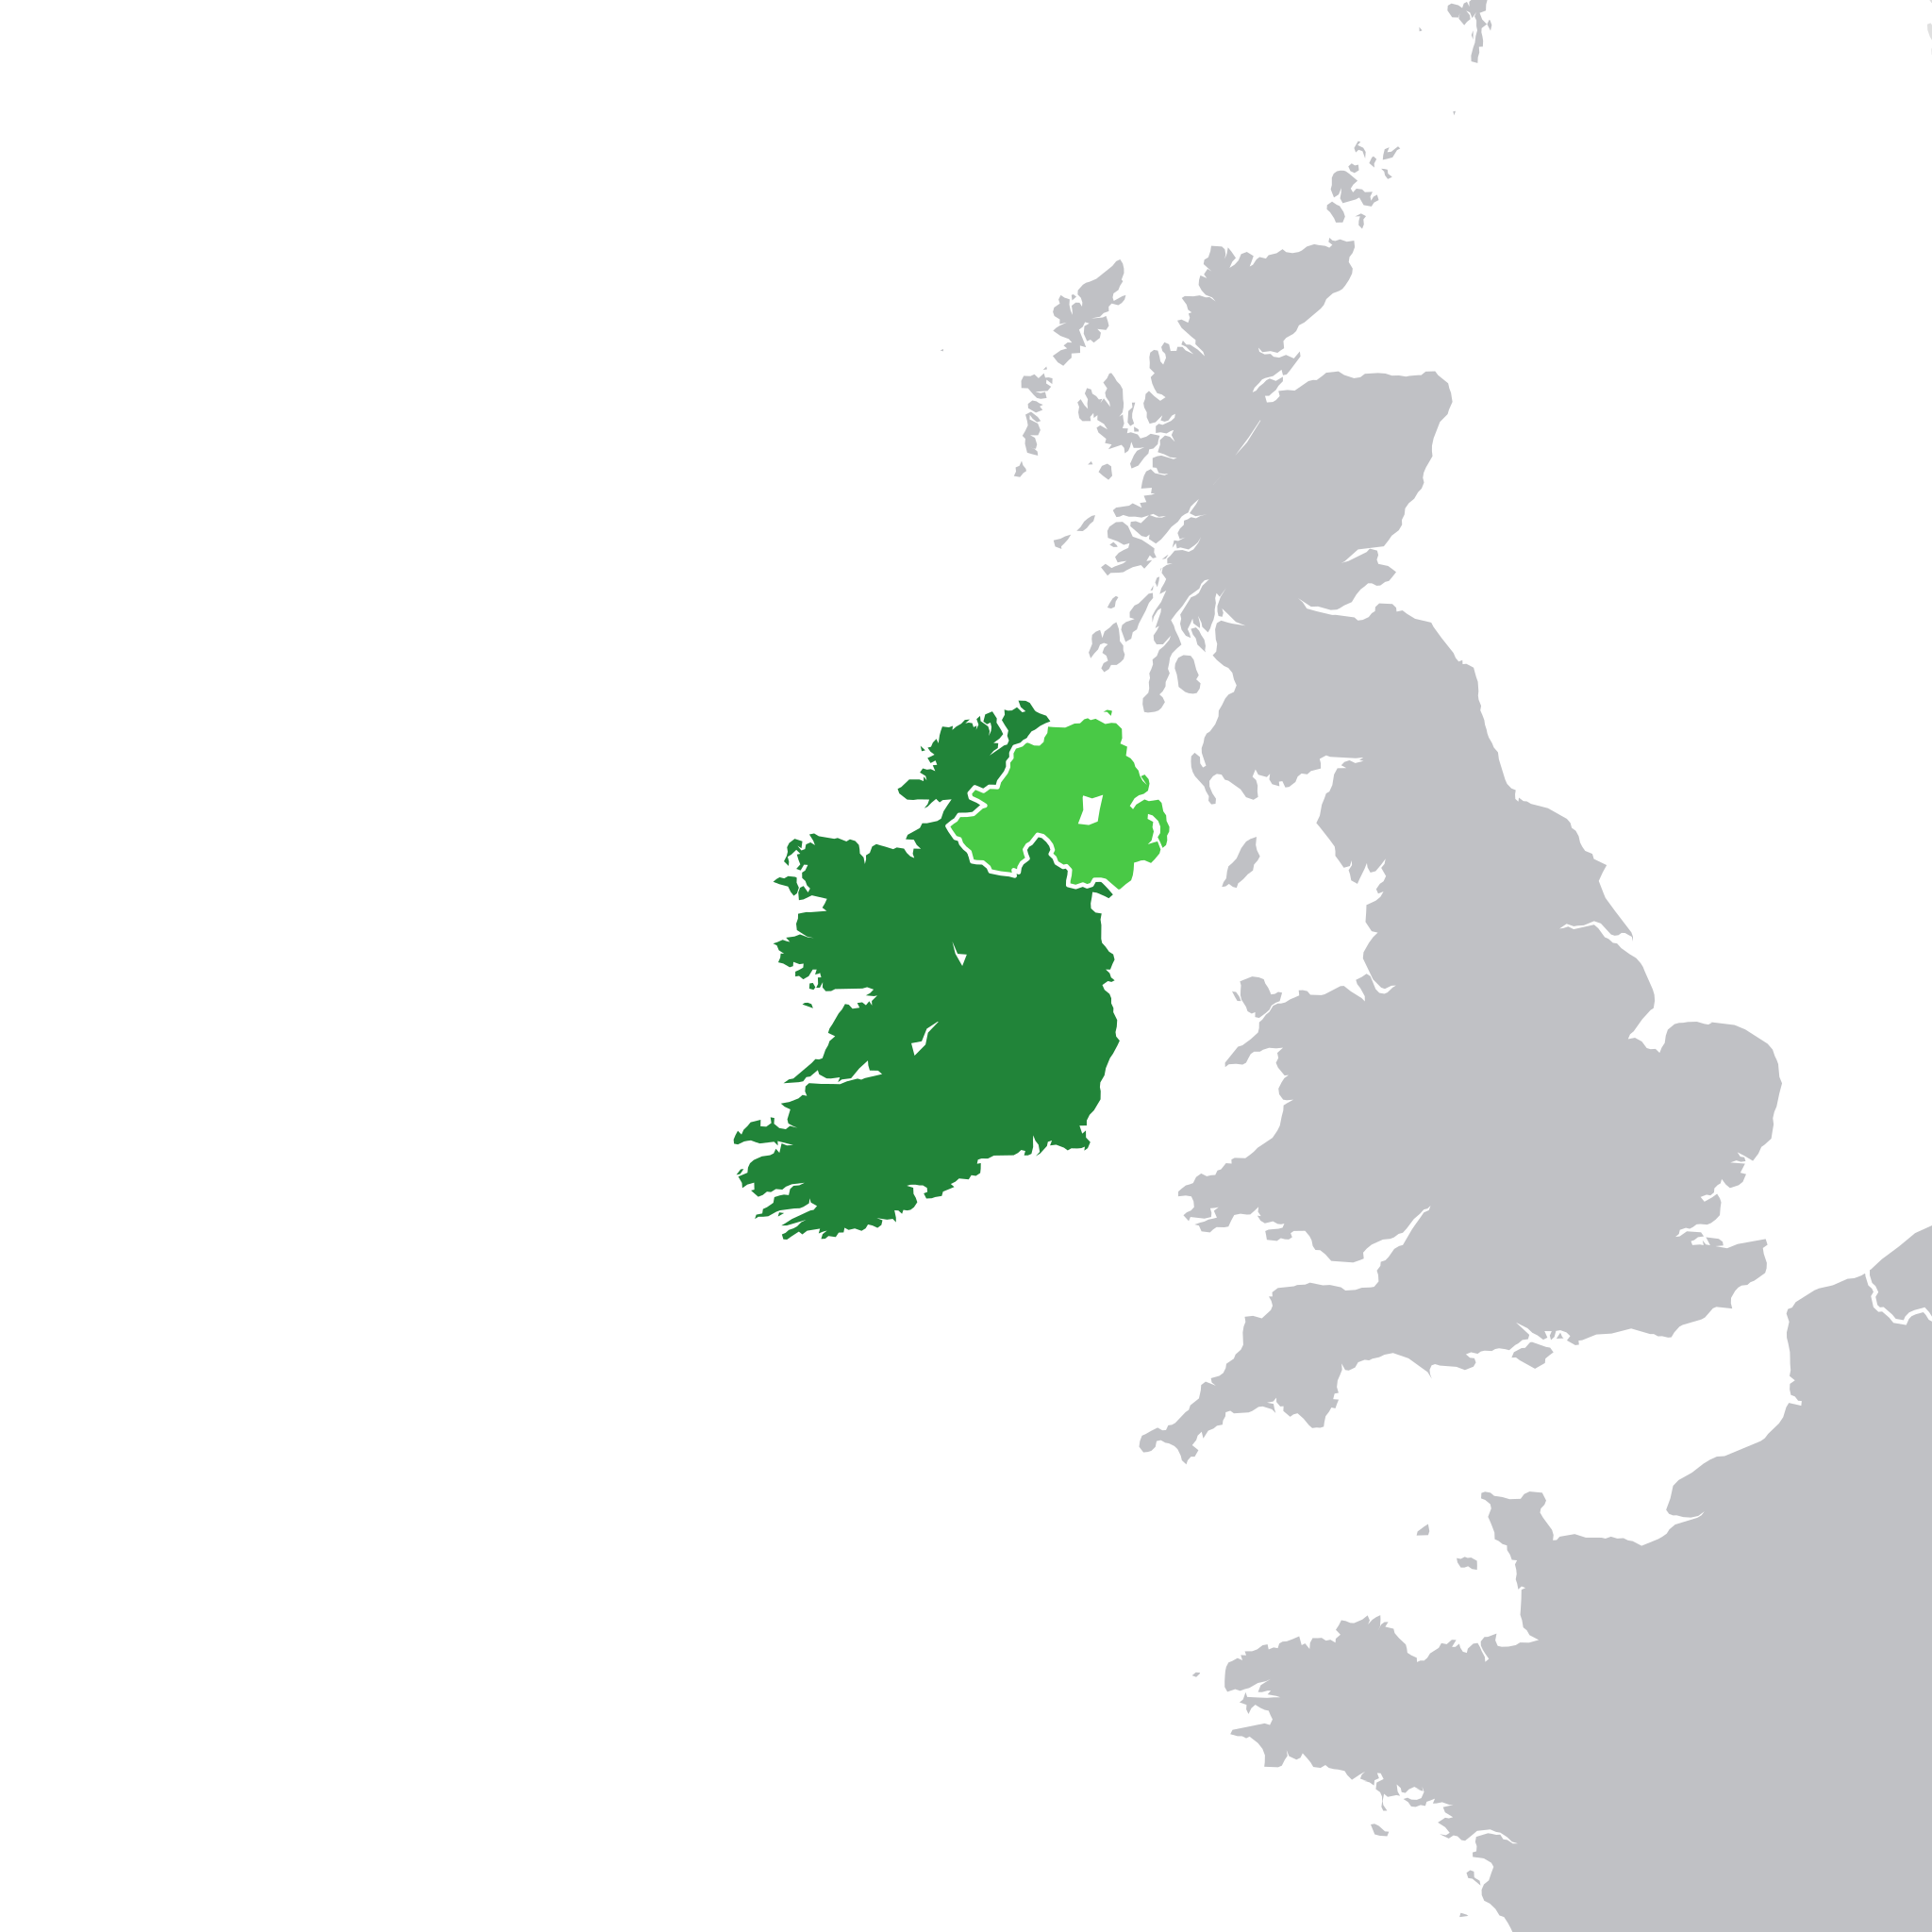 Light green area is under British occupation.